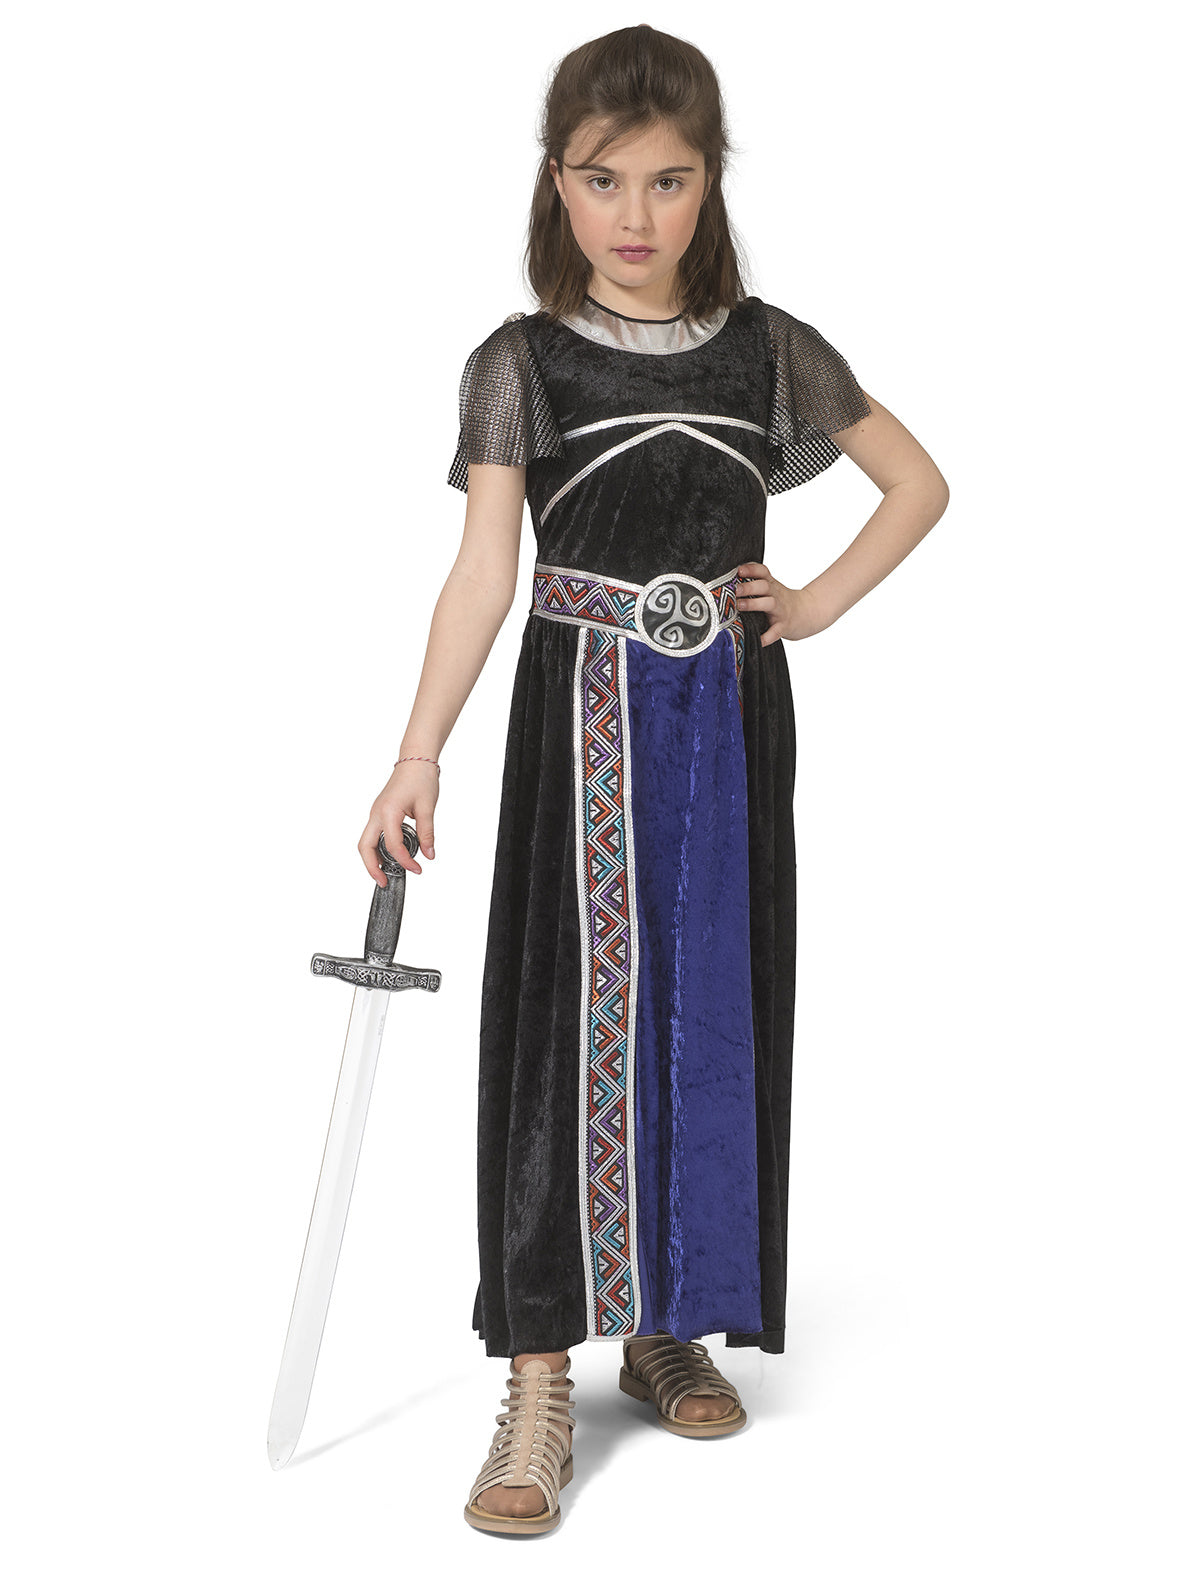 Funny Fashion - Strijder (Oudheid) Kostuum - Goddelijke Onoverwinnelijke Griekse Strijder Troje - Meisje - blauw,zwart - Maat 116 - Carnavalskleding - Verkleedkleding